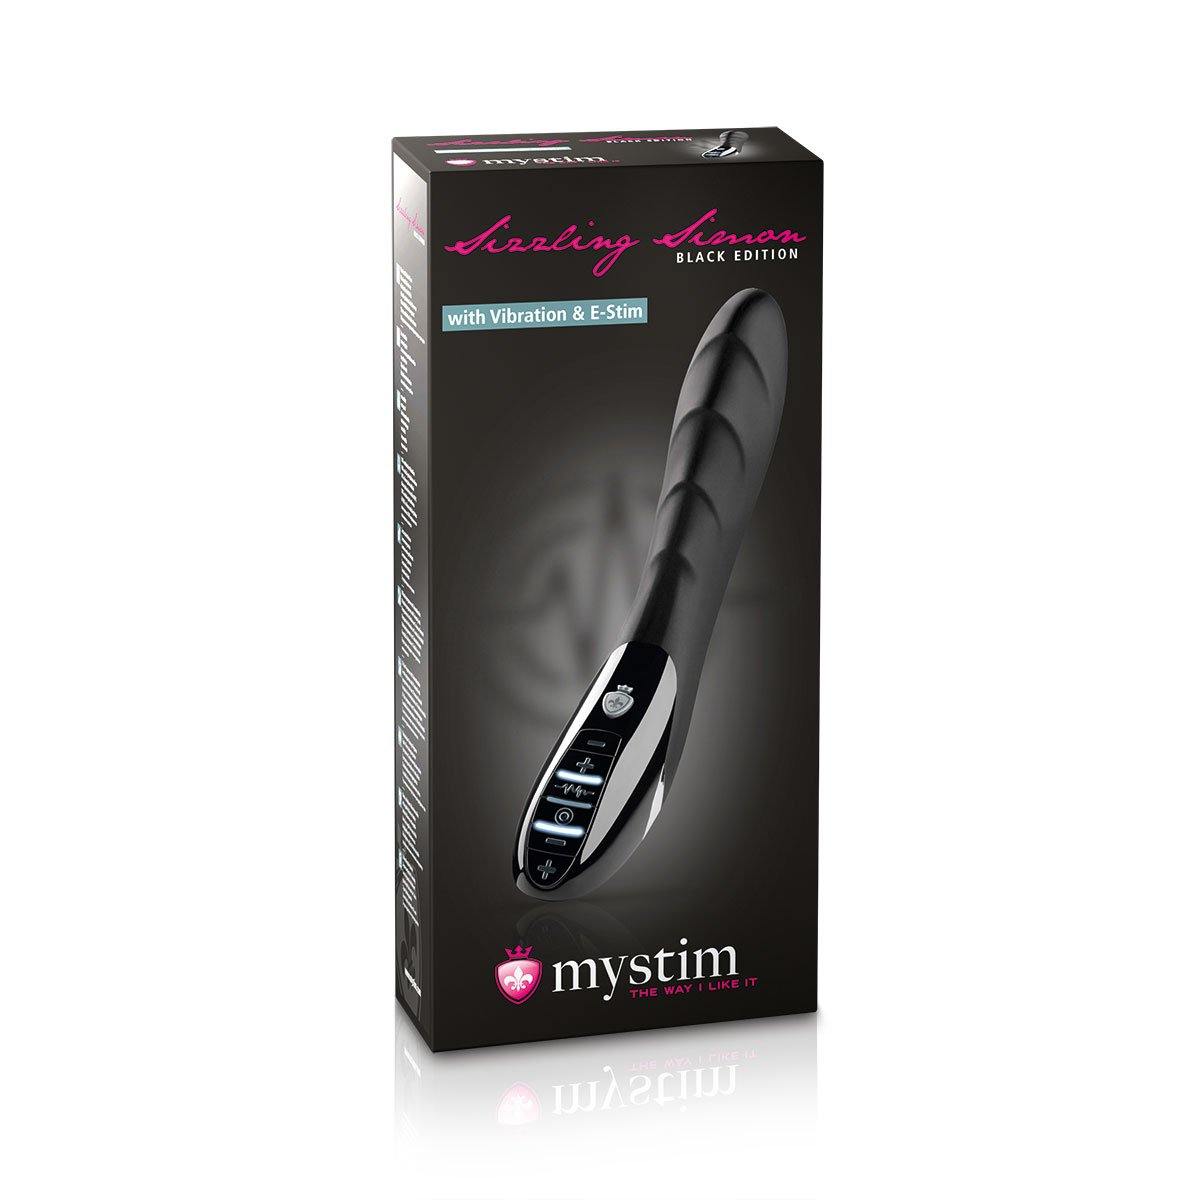 Mystim Sizzling Simon E-Stim Vibrator - Buy At Luxury Toy X - Free 3-Day Shipping